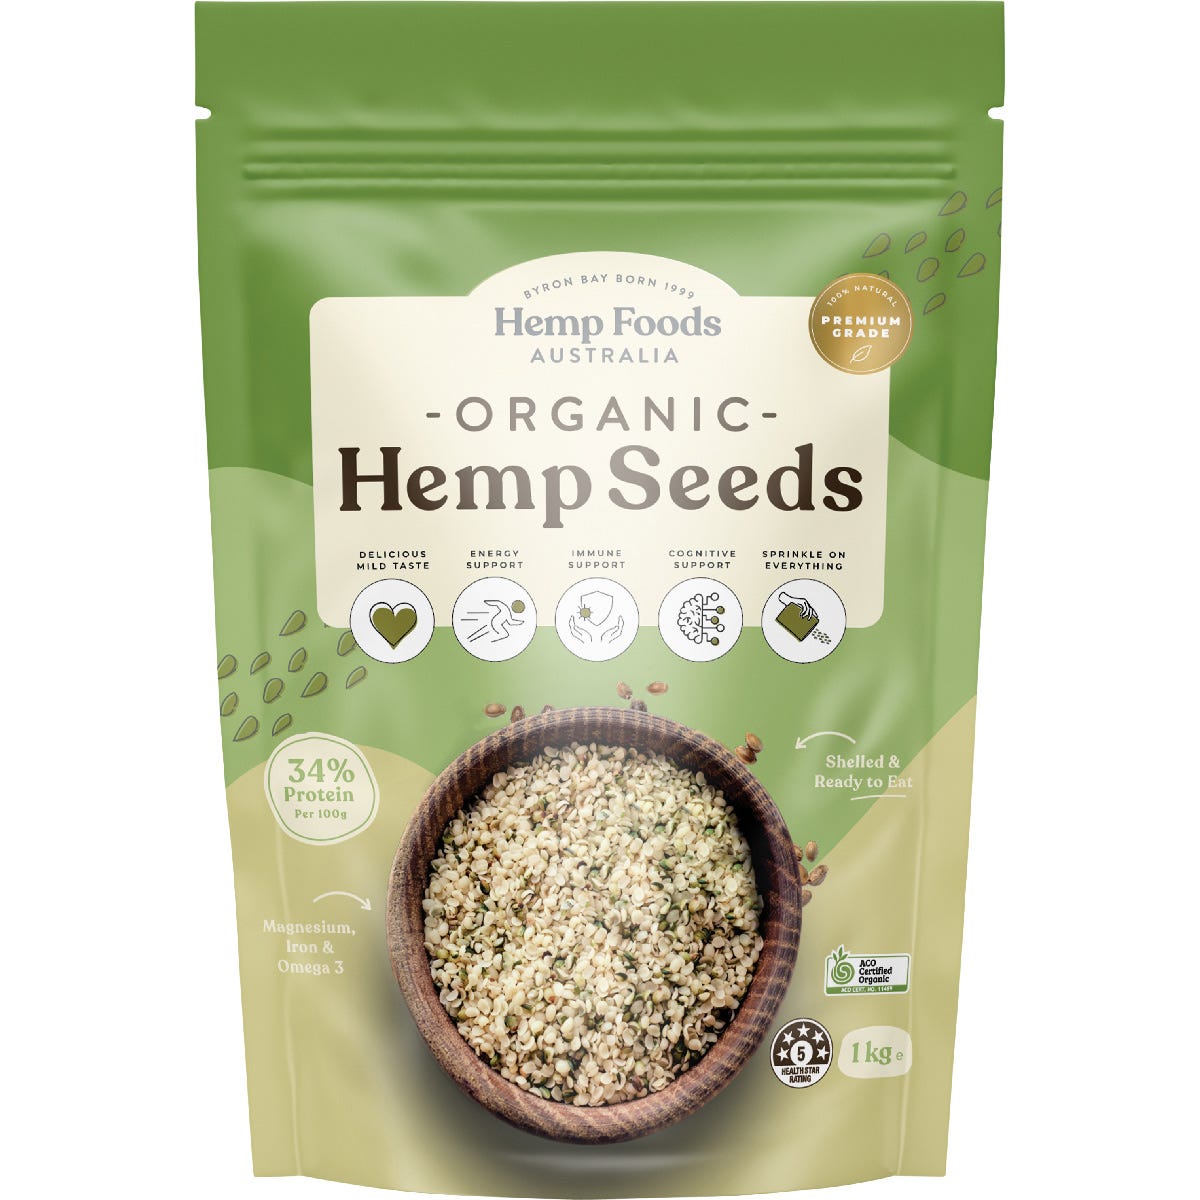 Hemp Foods Australia Organic Hemp Seeds Hulled 1kg - Dr Earth - Hemp